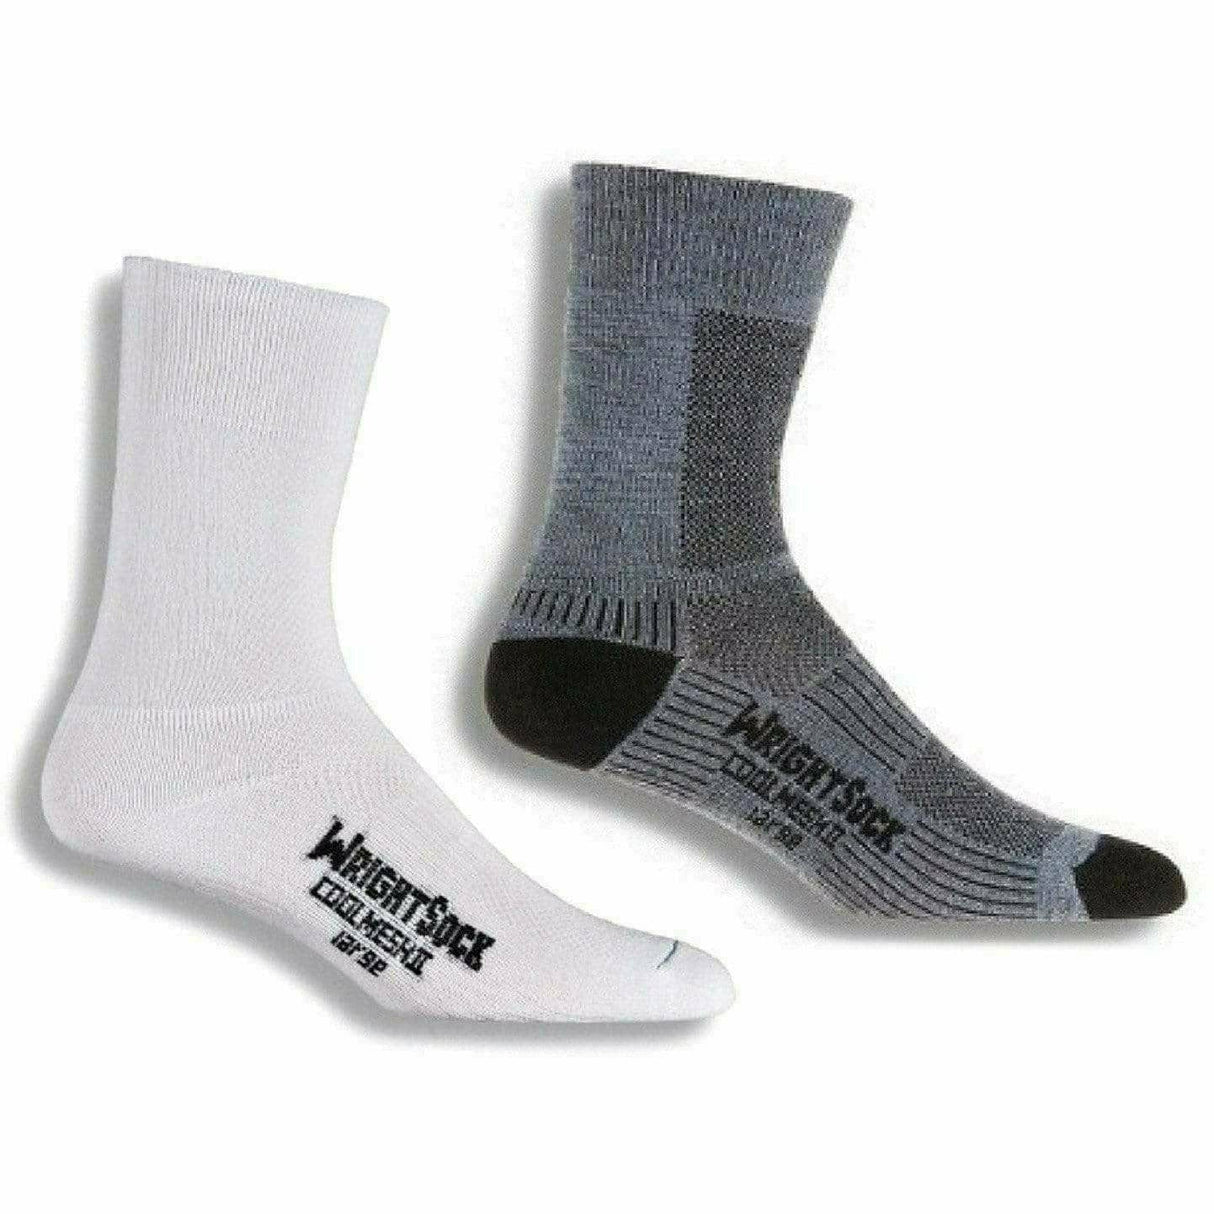 Wrightsock Coolmesh II Crew Socks - Clearance  -  Small / White/Grey / 2-Pair Pack